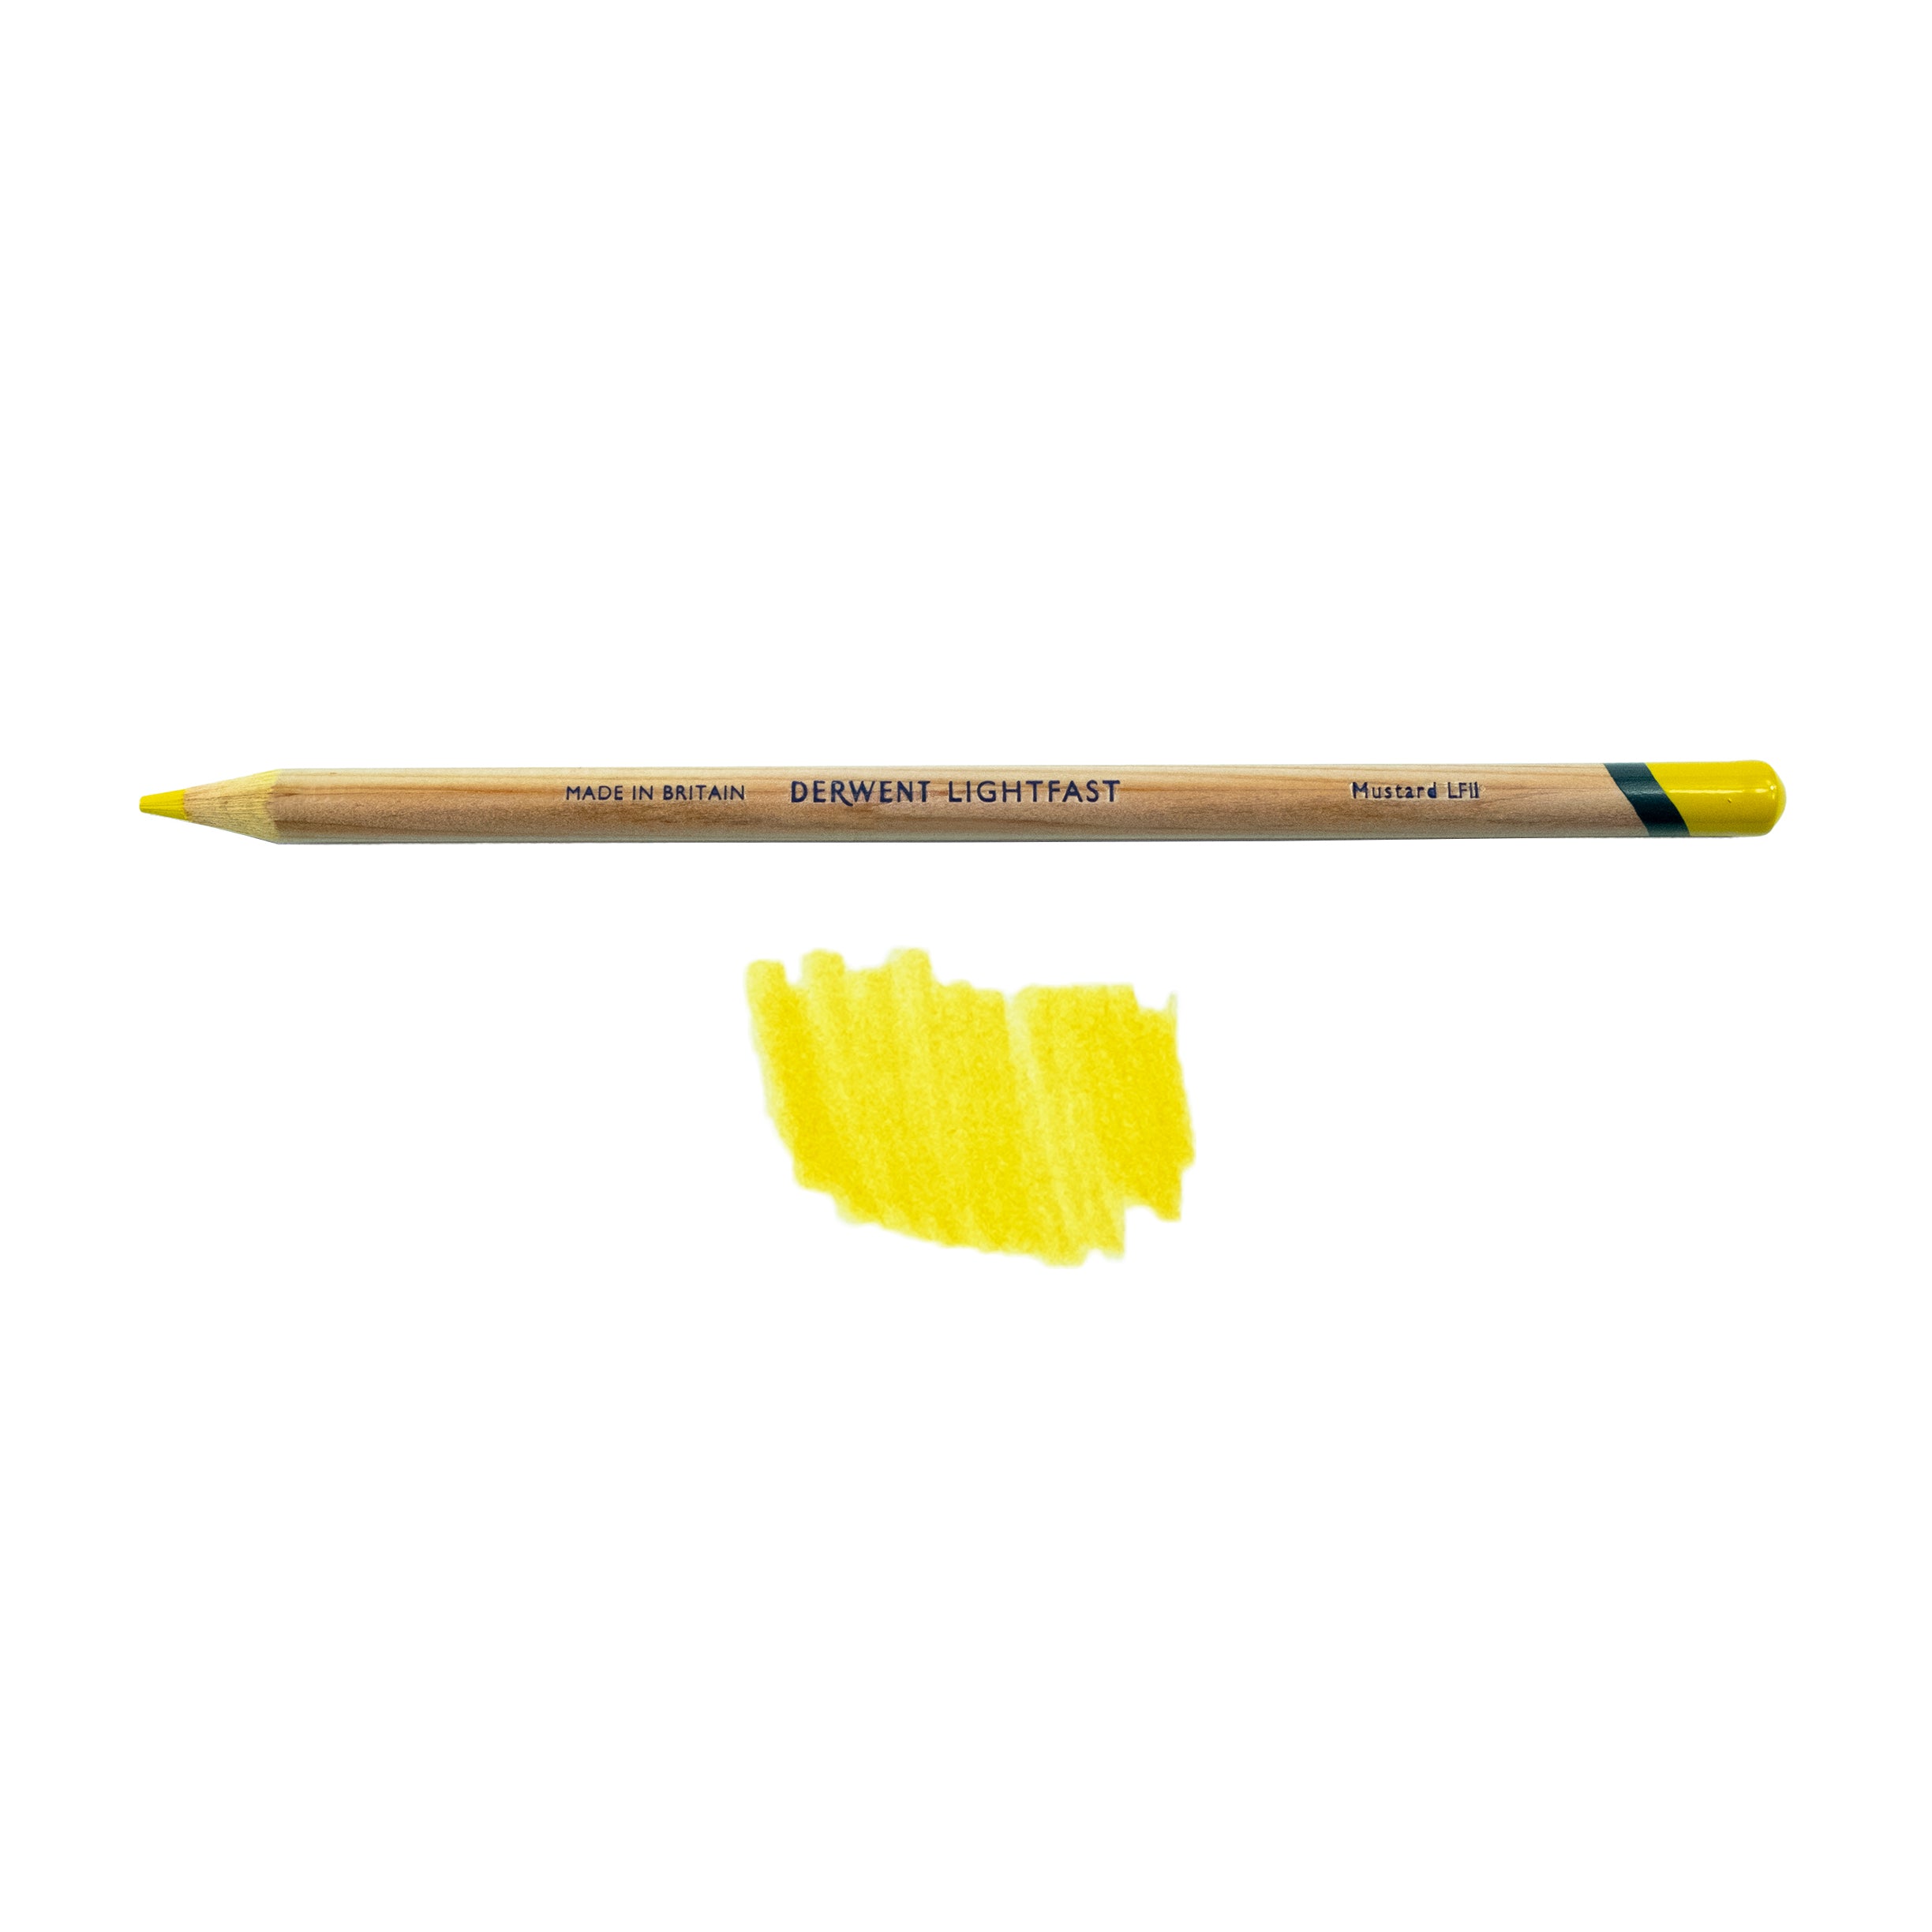 Derwent Lightfast Colored Pencil